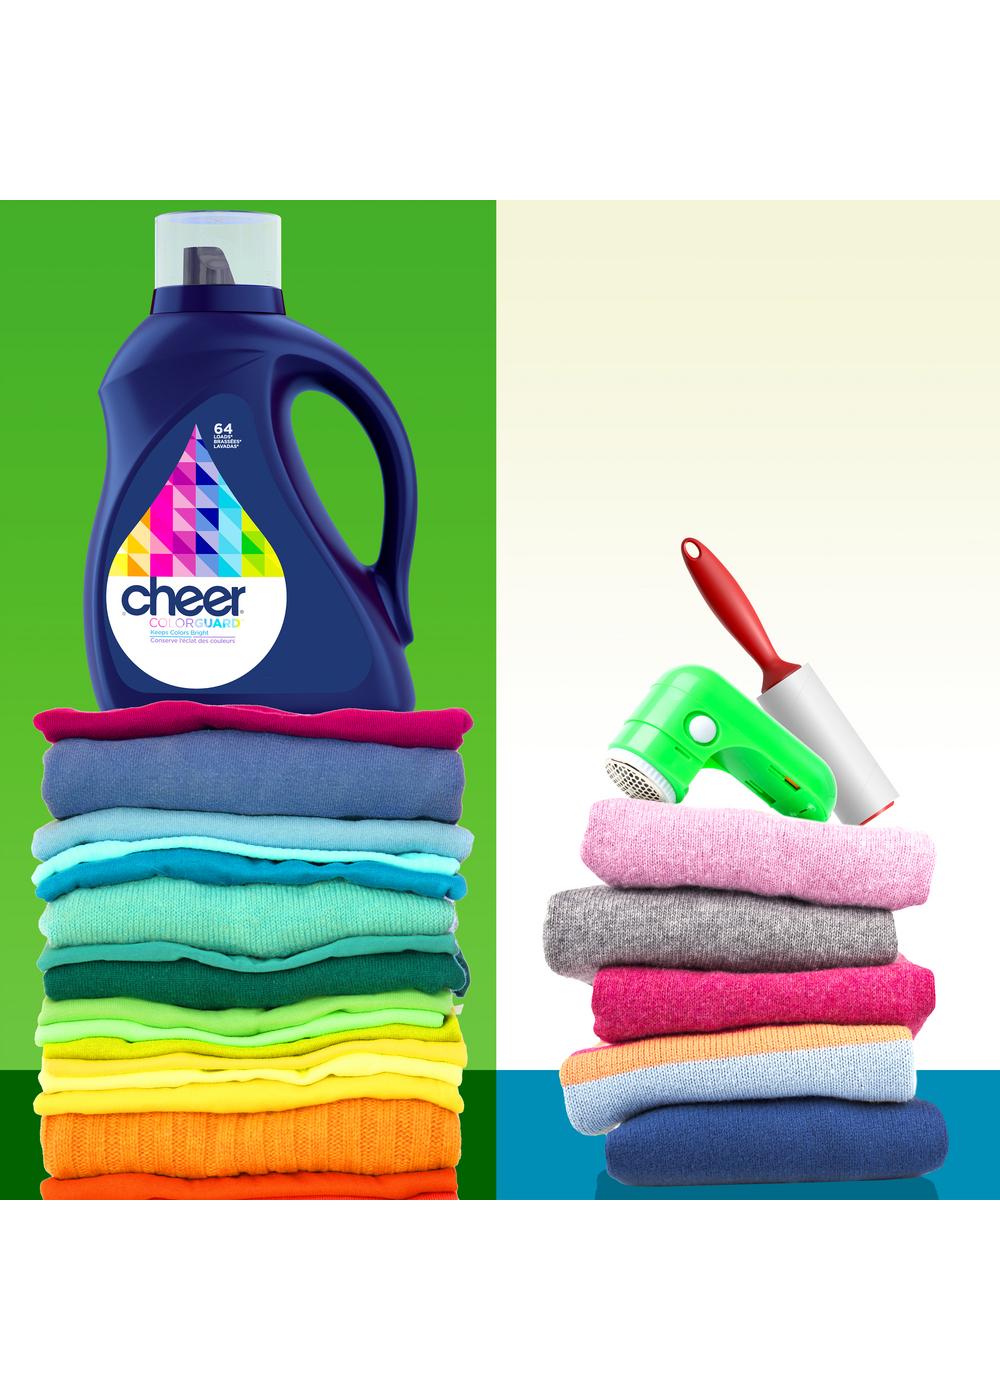 Cheer Colorguard HE Liquid Laundry Detergent, 64 Loads; image 5 of 7